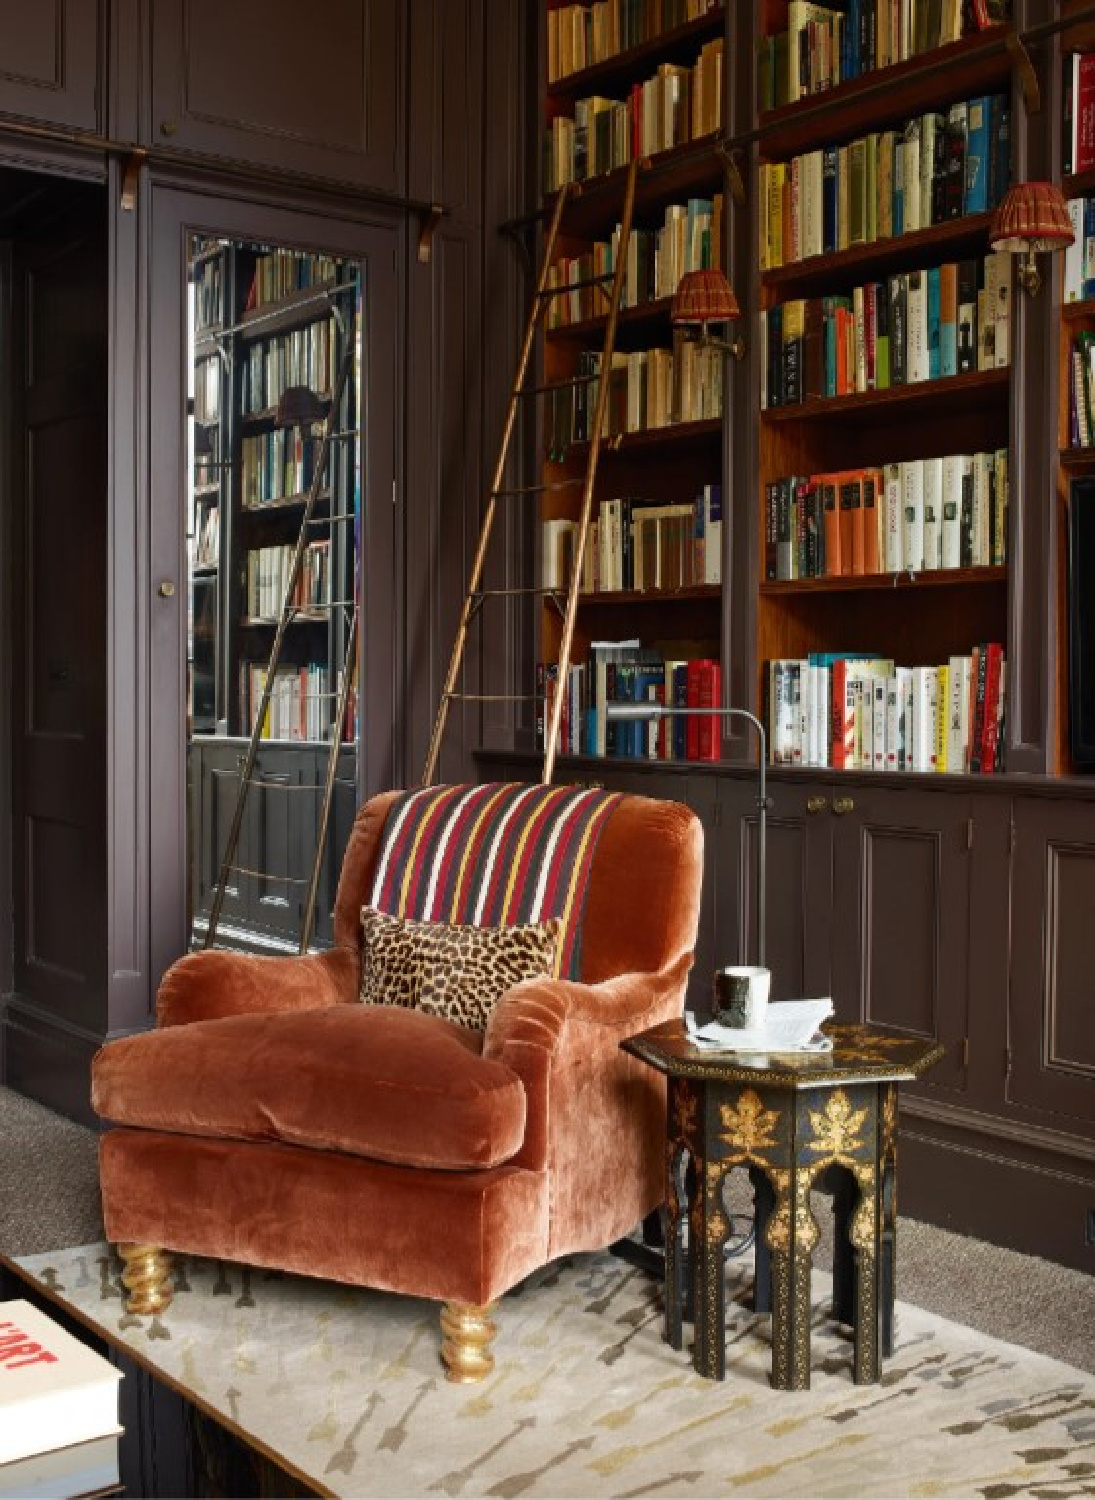 Douglas Mackie designed snug room home library painted dark moody colors with burnt orange velvet arm chair (photo Simon Upton in House & Garden UK). #homelibrary #englishlibrary #snugrooms